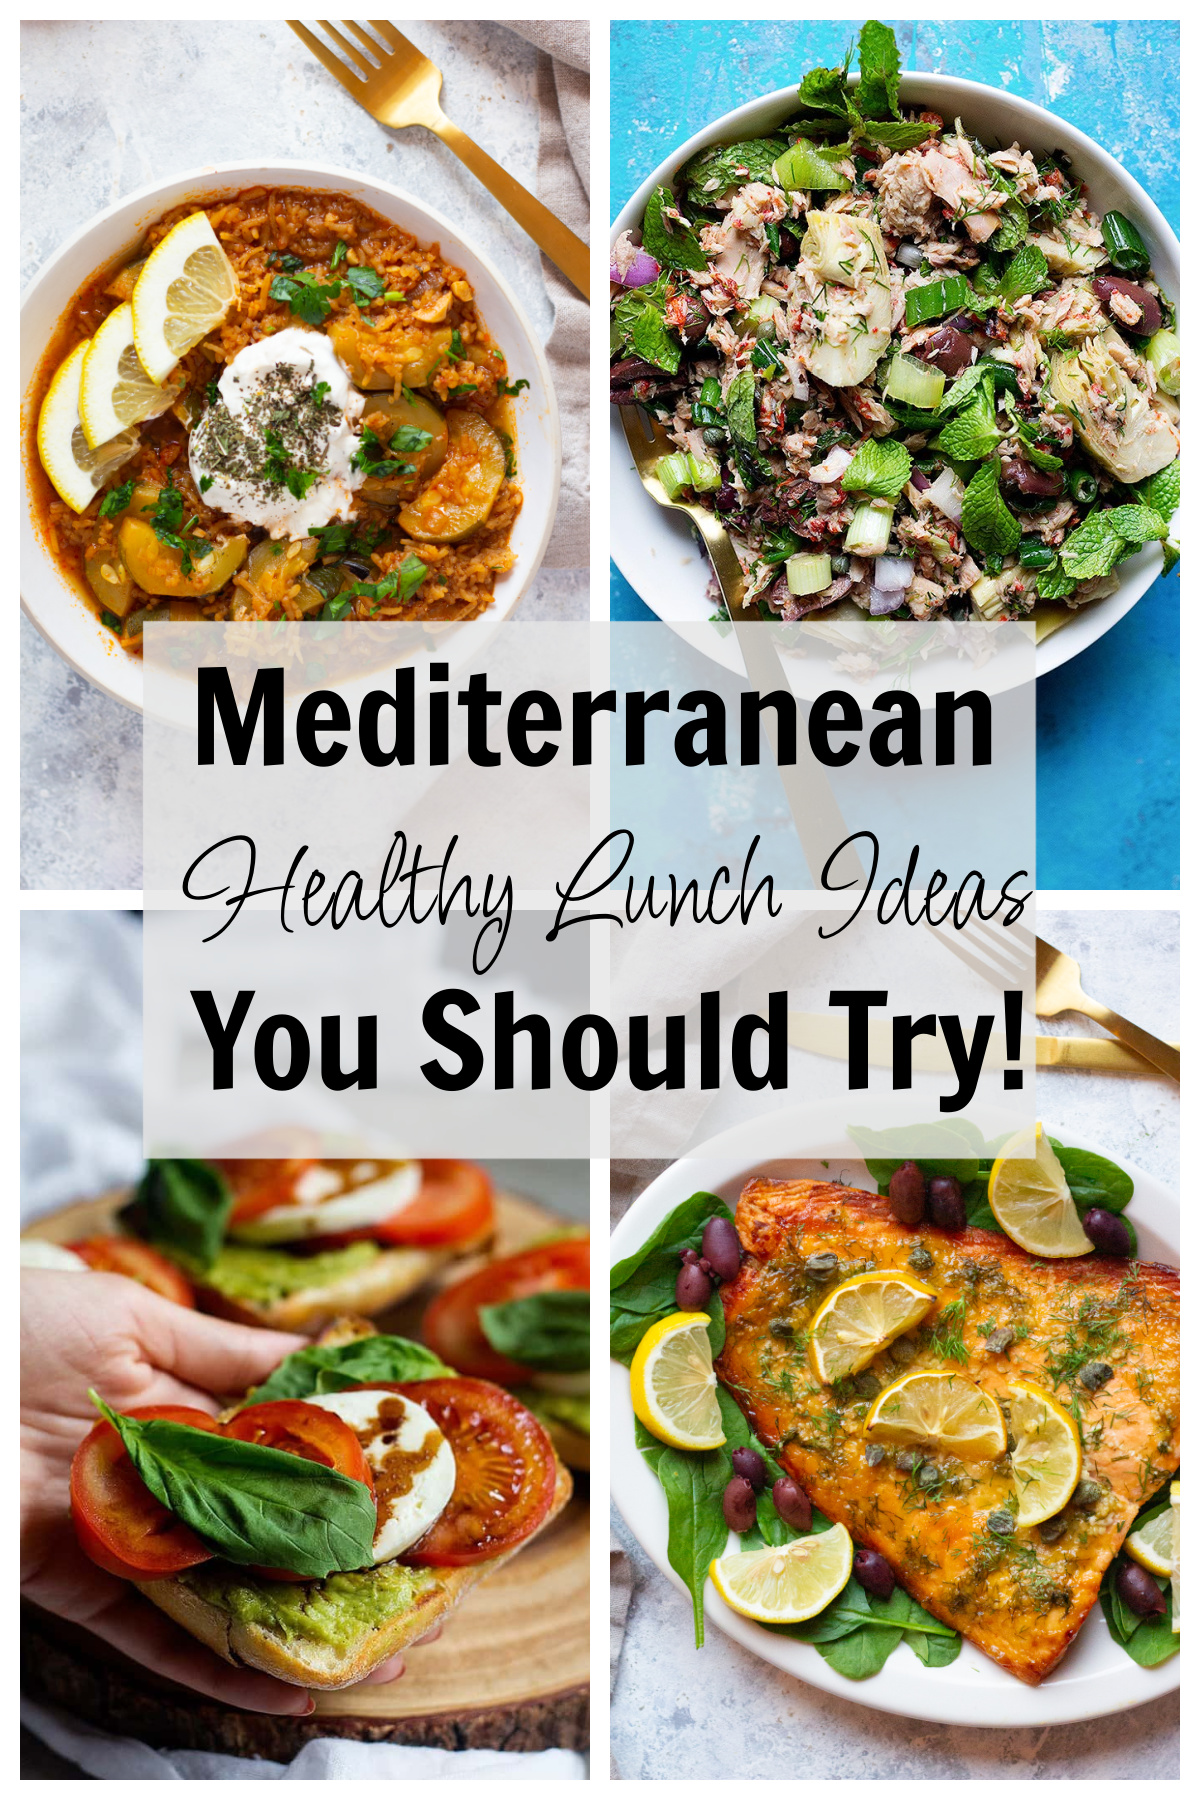 healthy lunch ideas Mediterranean style. 